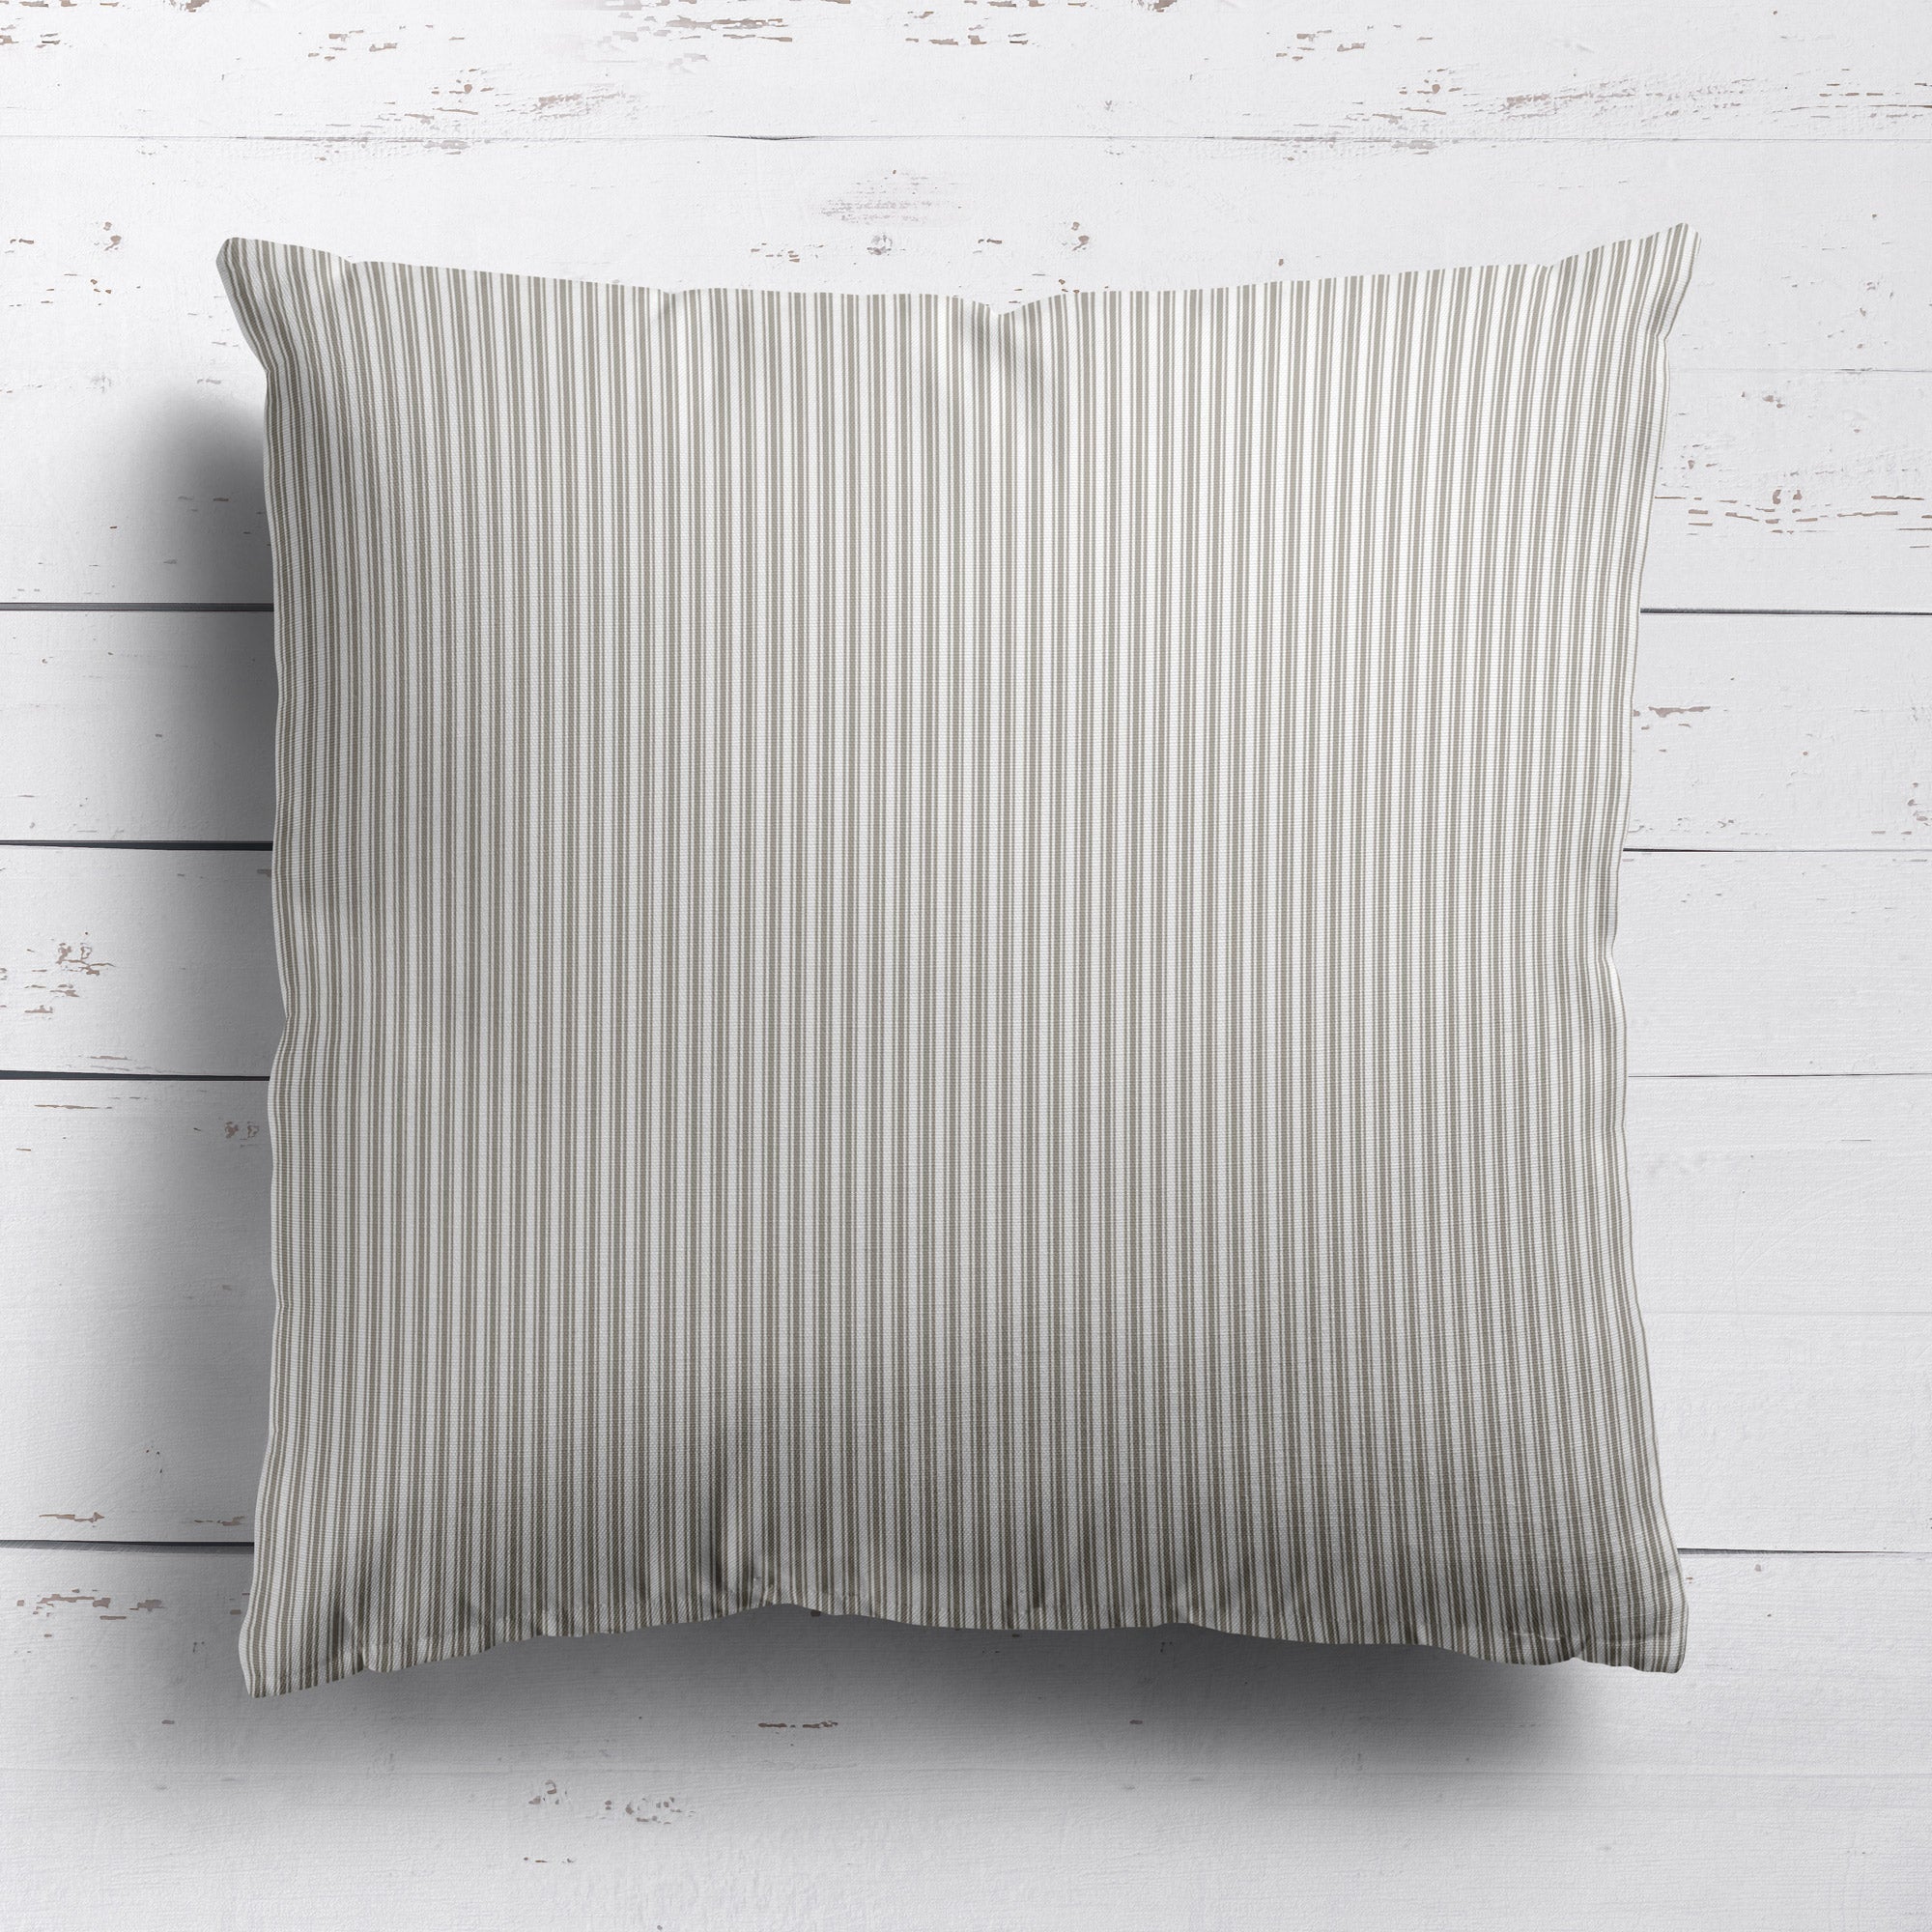 Ticking Stripe Cushion - Neutrals - Hydrangea Lane Home